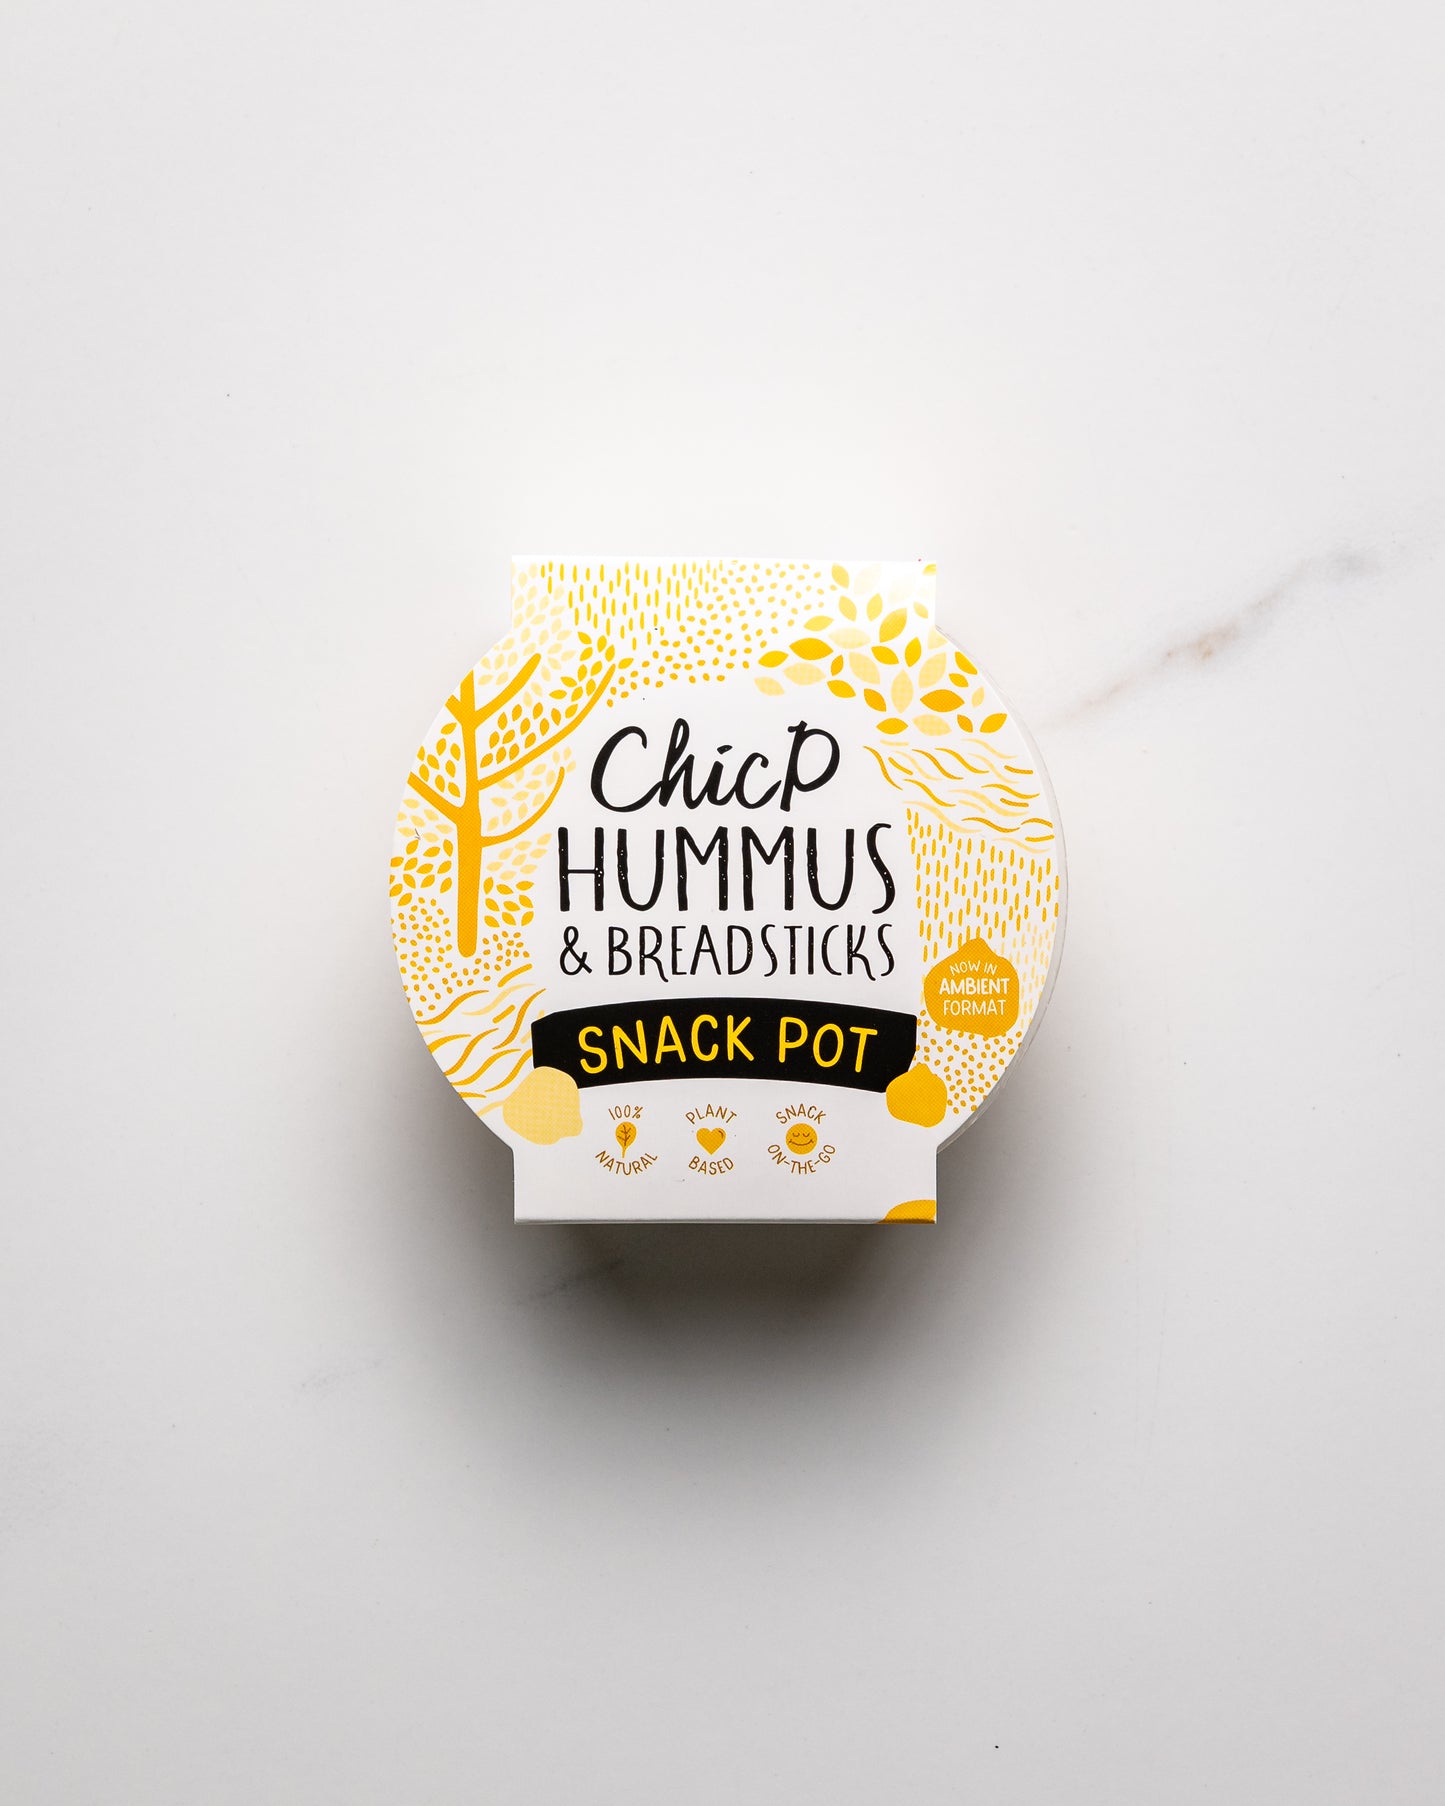 Breadstick & Hummus Snack Pack